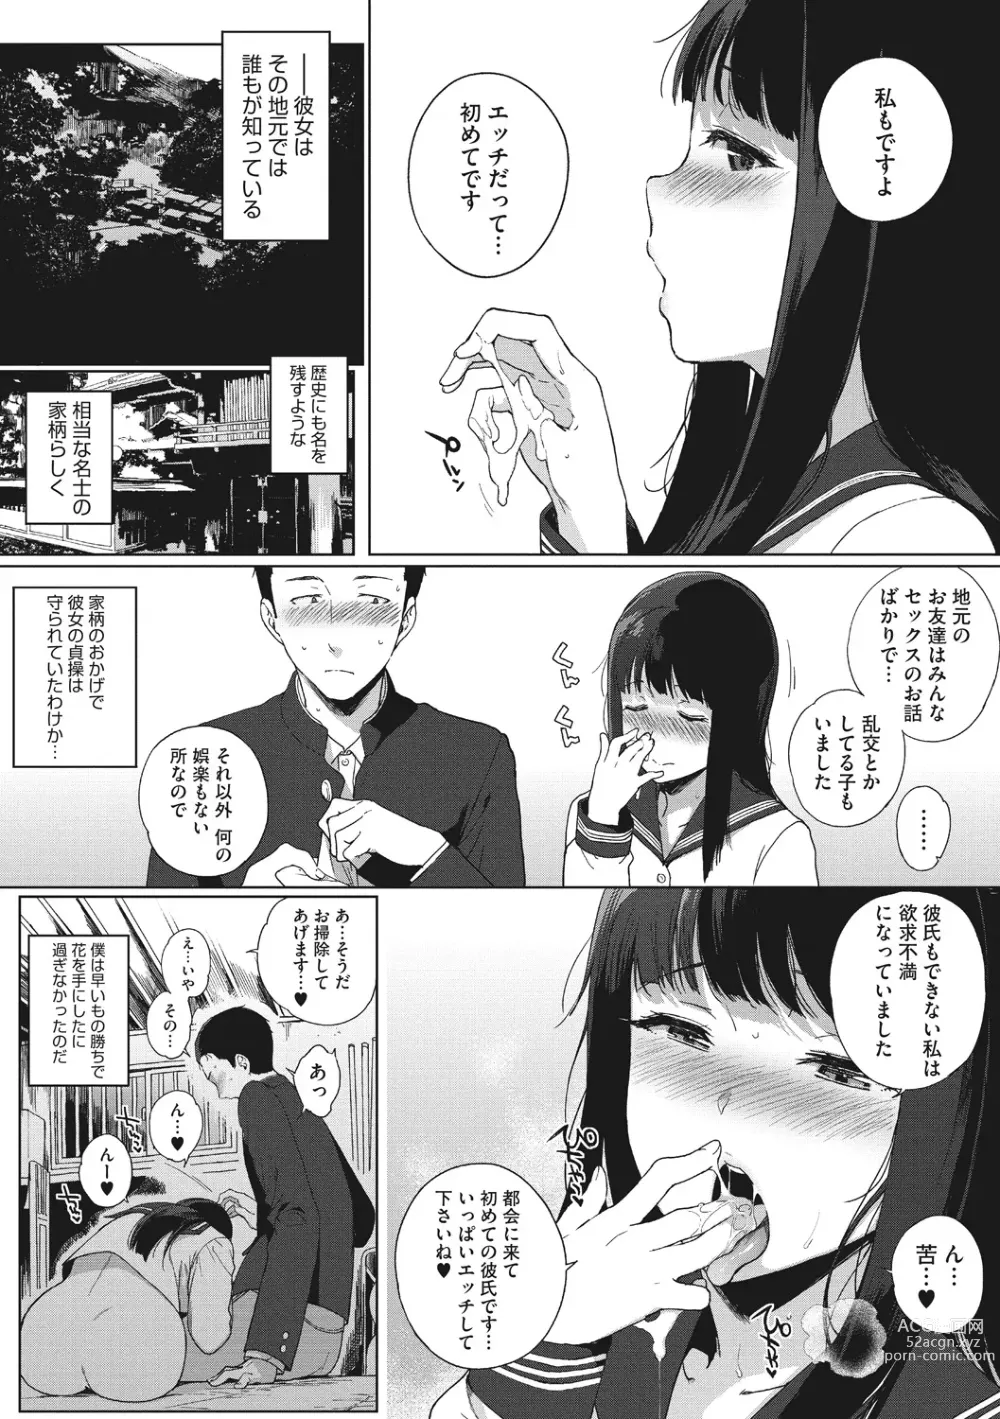 Page 13 of manga Houkago no Yuutousei